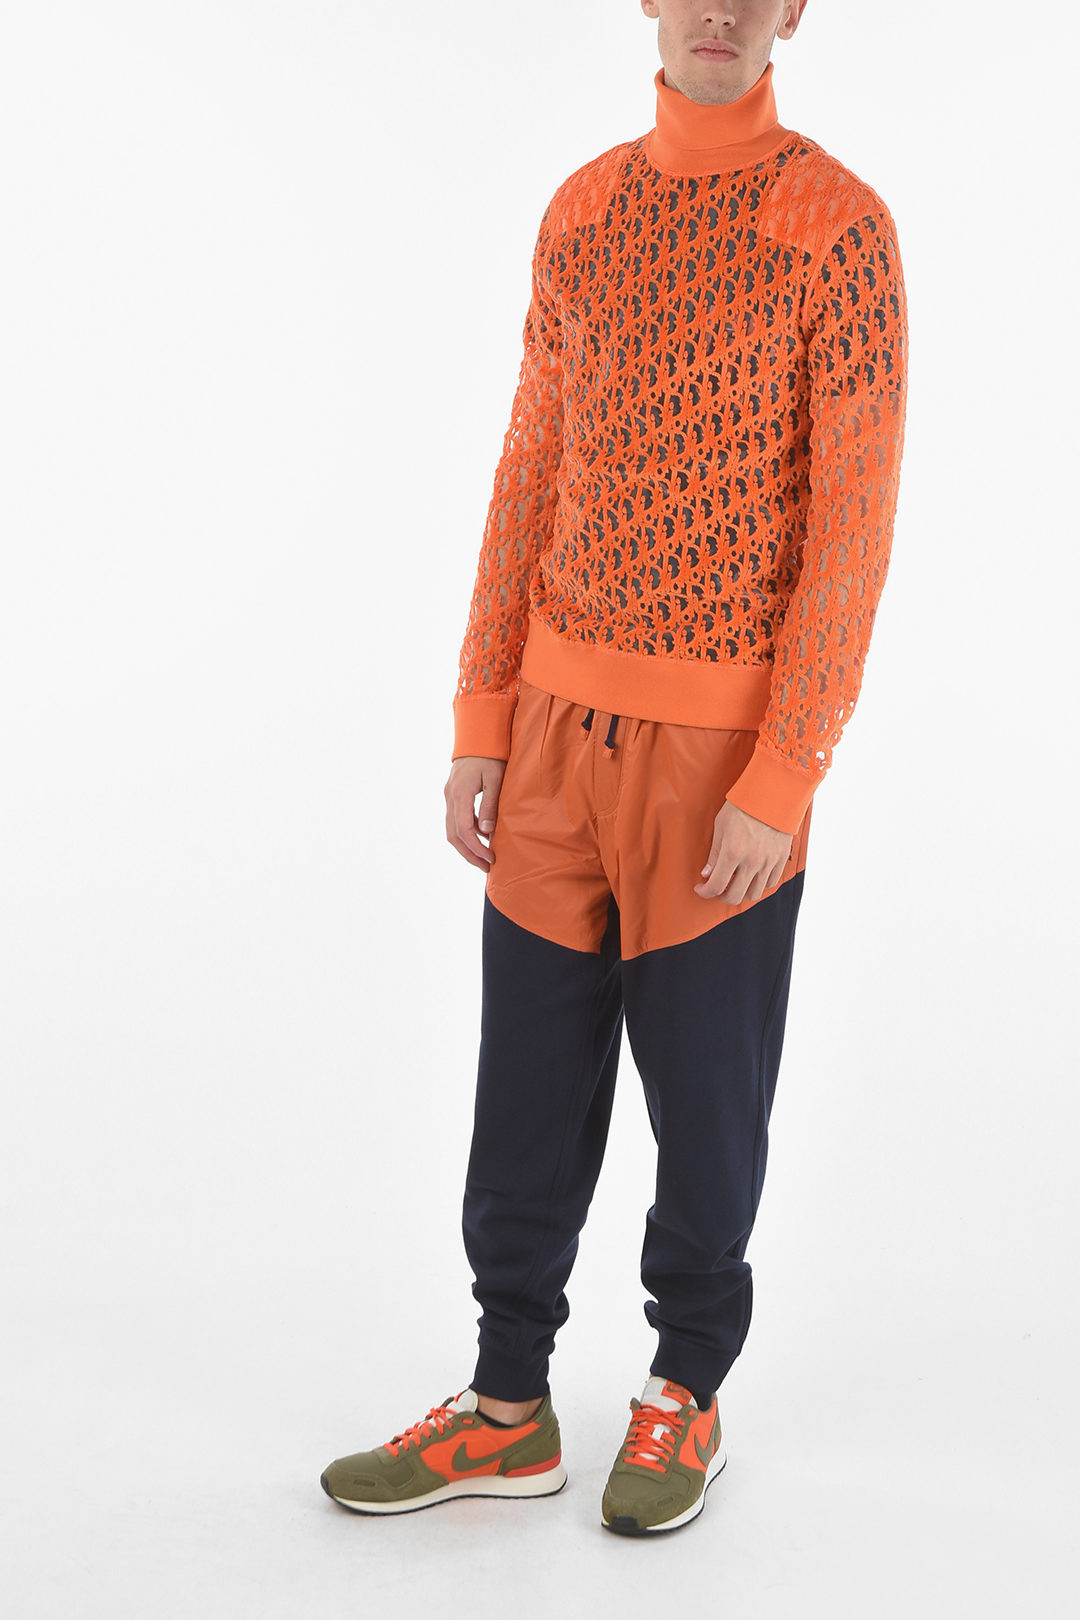 Dior Turtleneck Cuffed Monogram Mesh Sweater men - Glamood Outlet